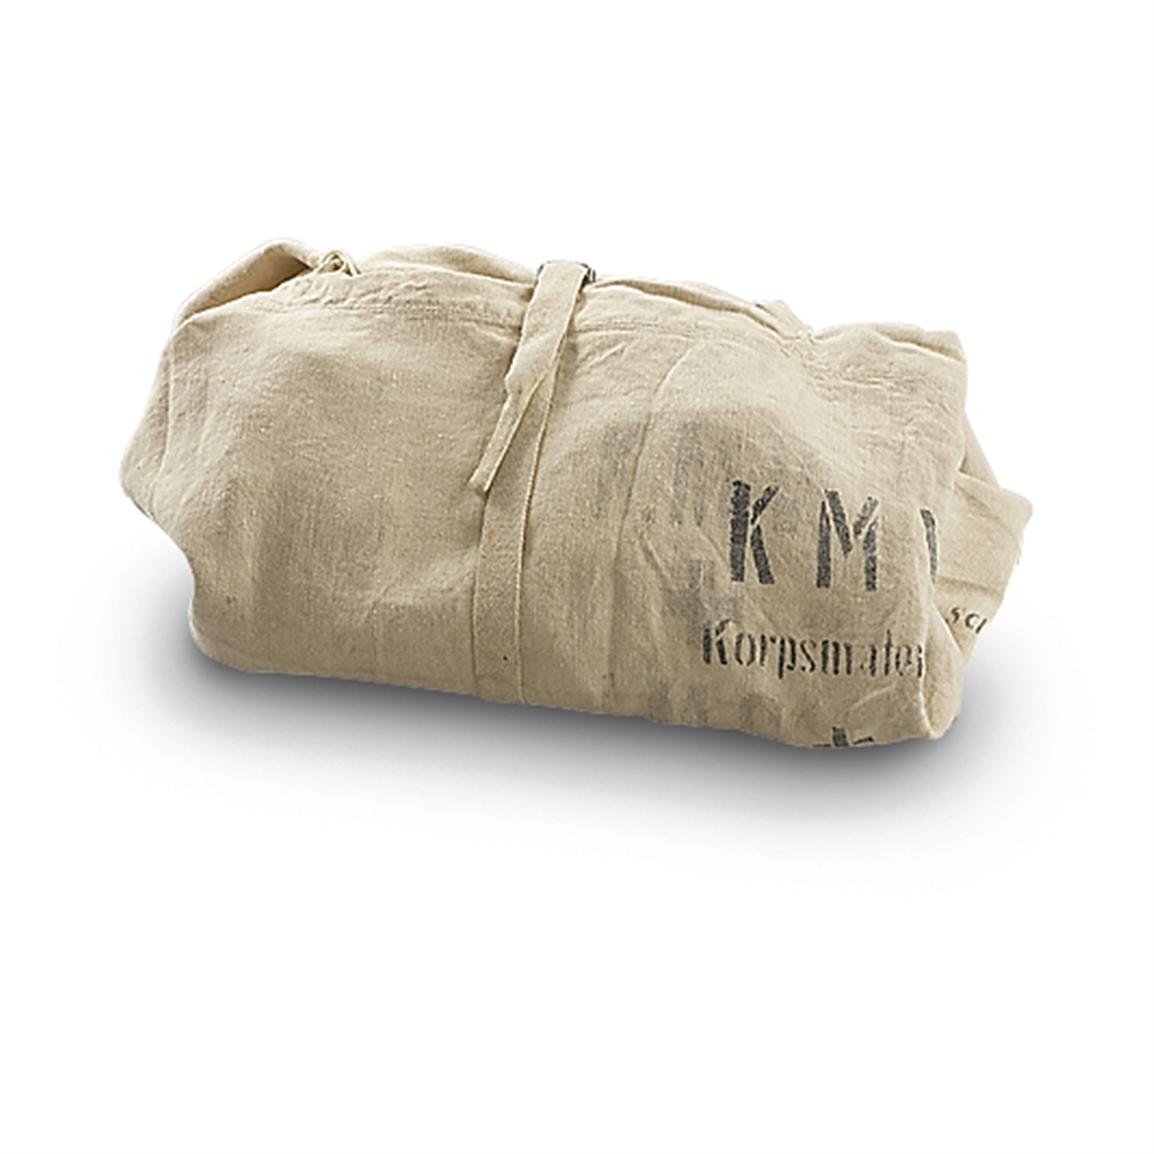 Used Swiss Military Surplus WWII Uniform Bag, Tan - 182420, Military & Camo Duffle Bags at ...